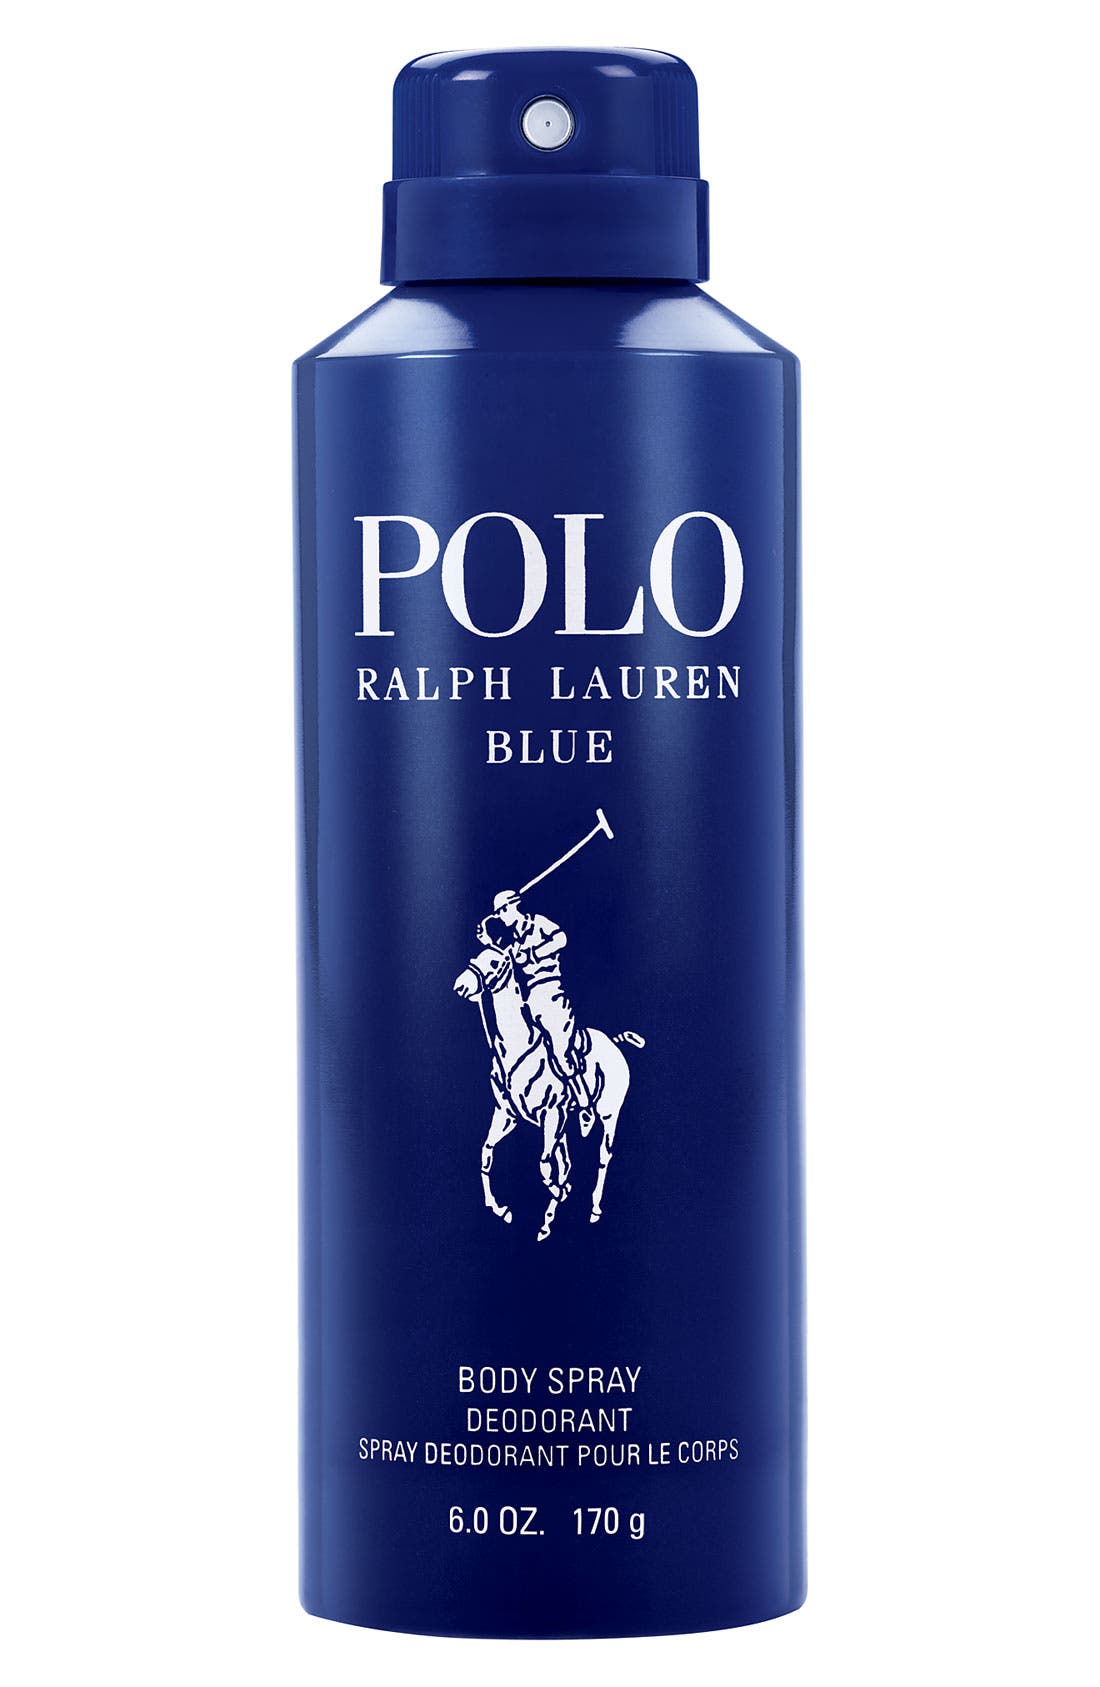 polo blue body spray